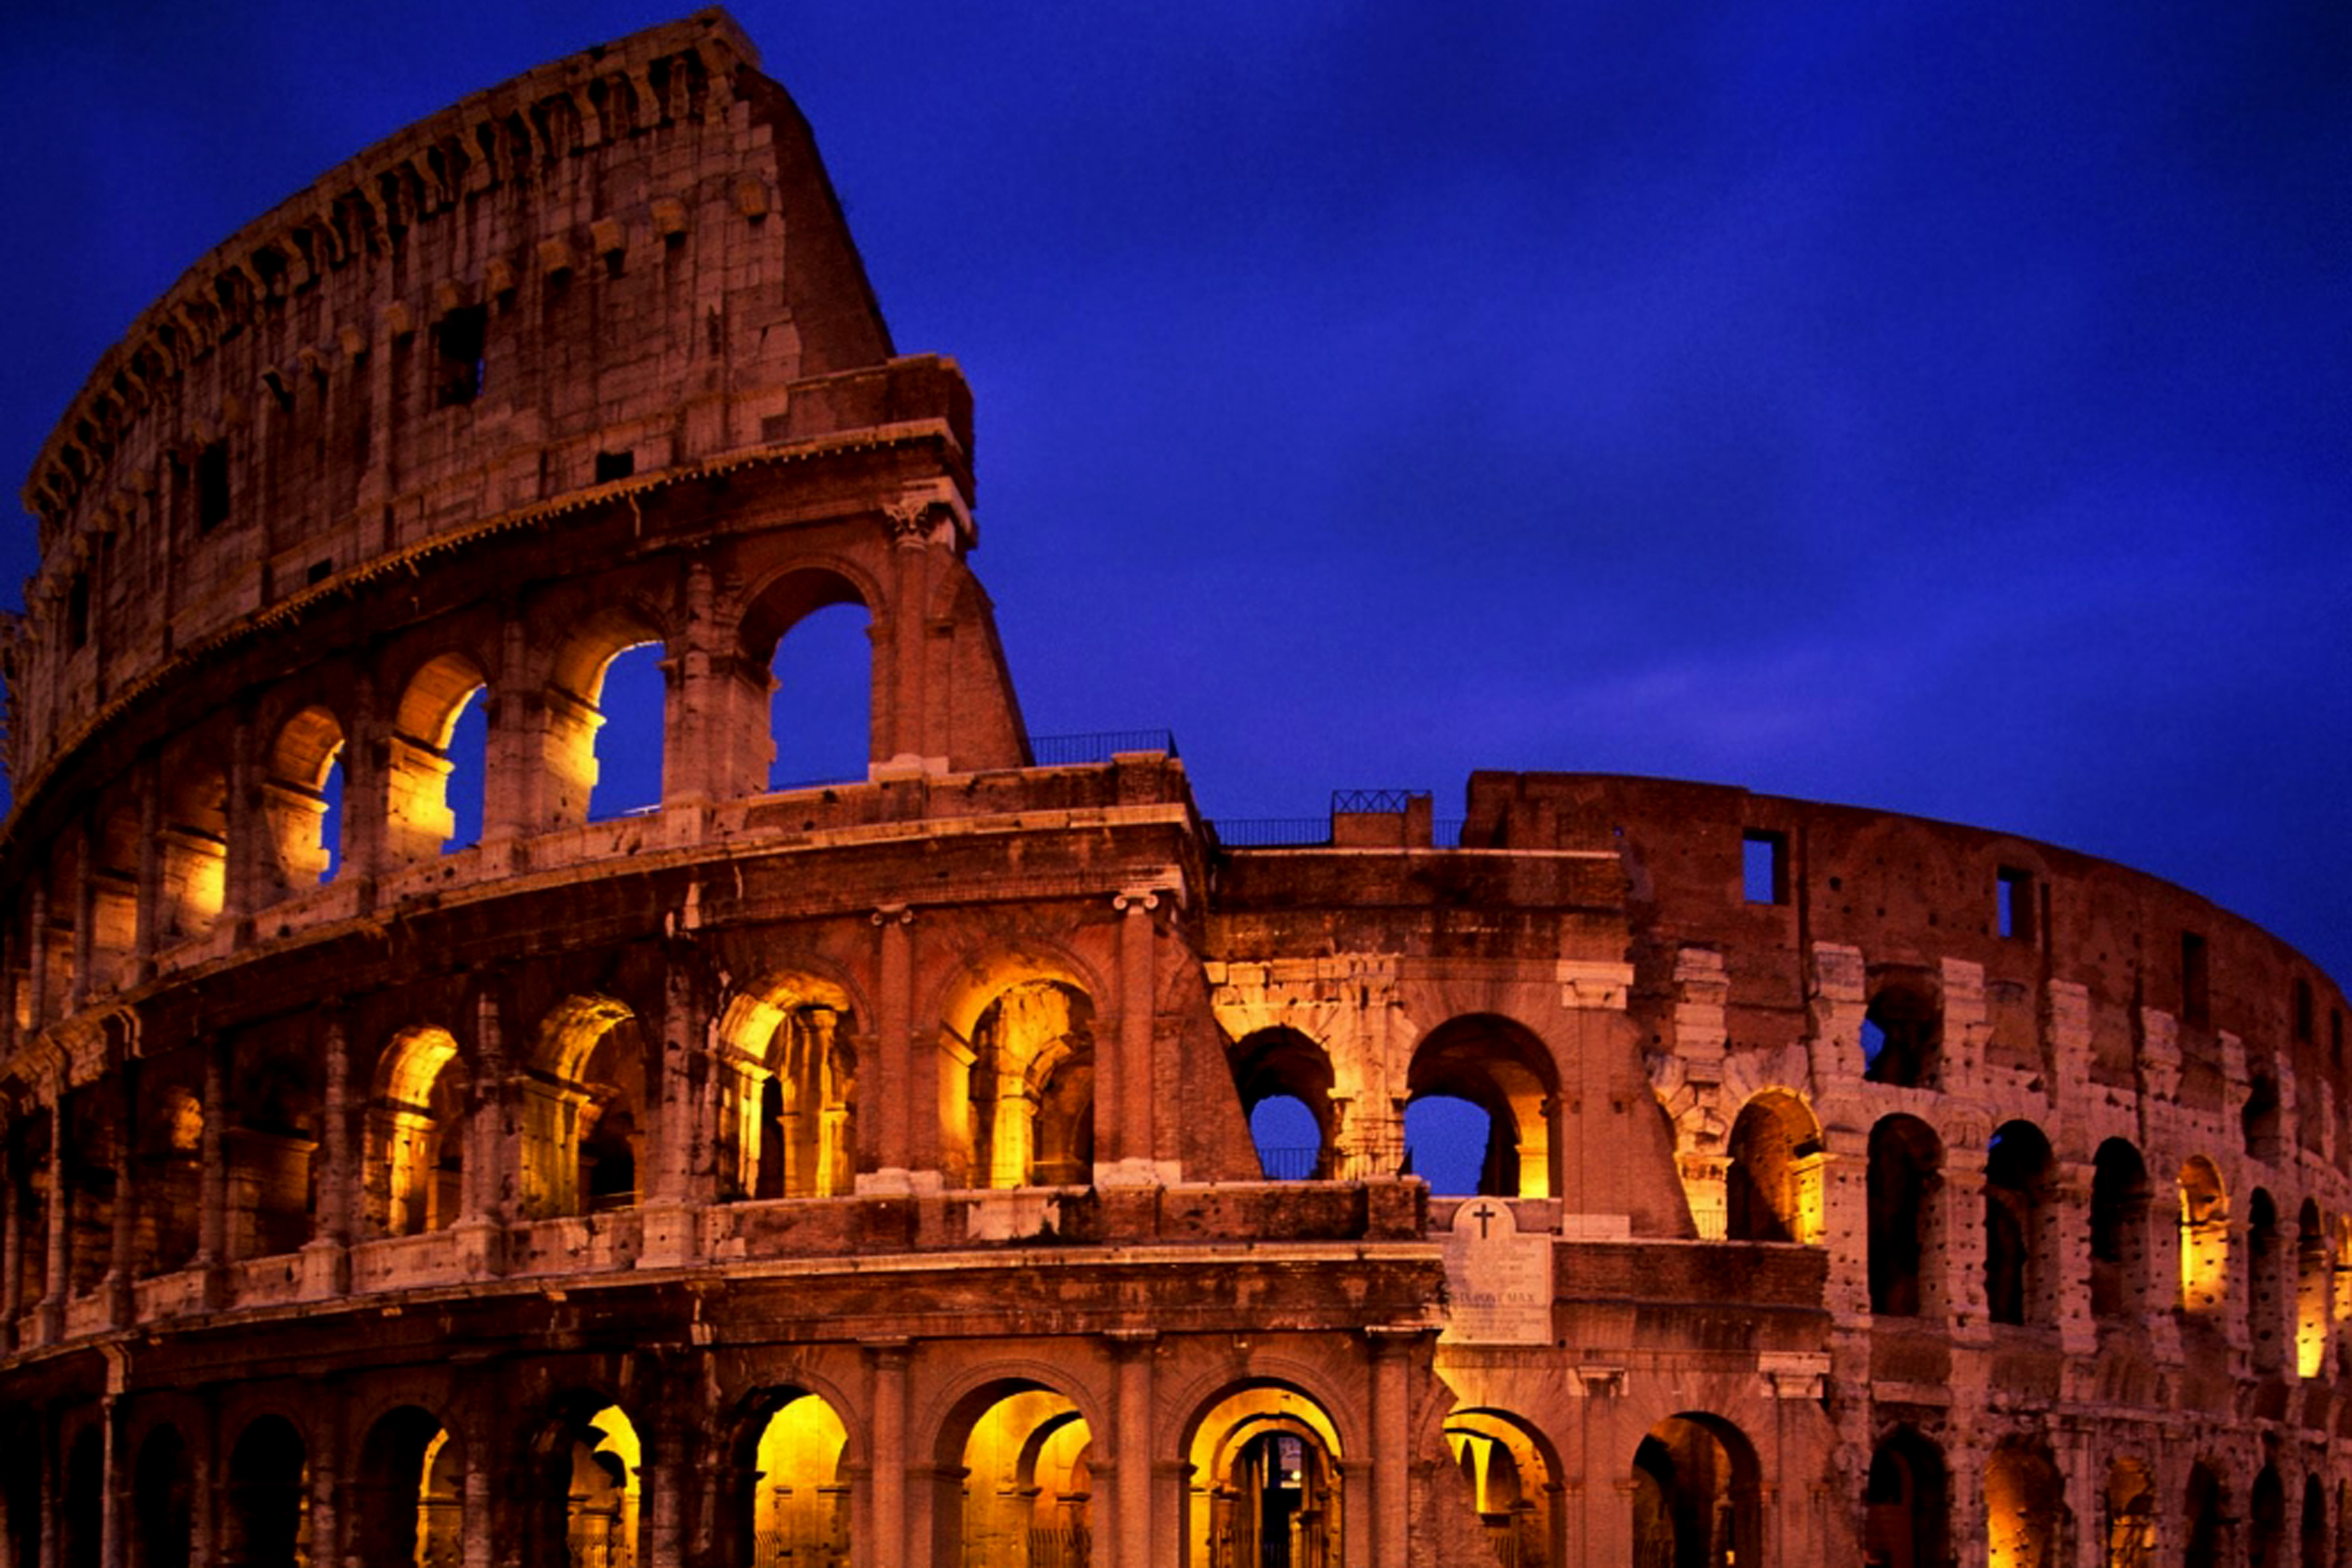 Древний рим это страна. Италия Колизей. Архитектура Италии Колизей. Италия столица Рим Колизей. Чудо света Римский Колизей в Италии.